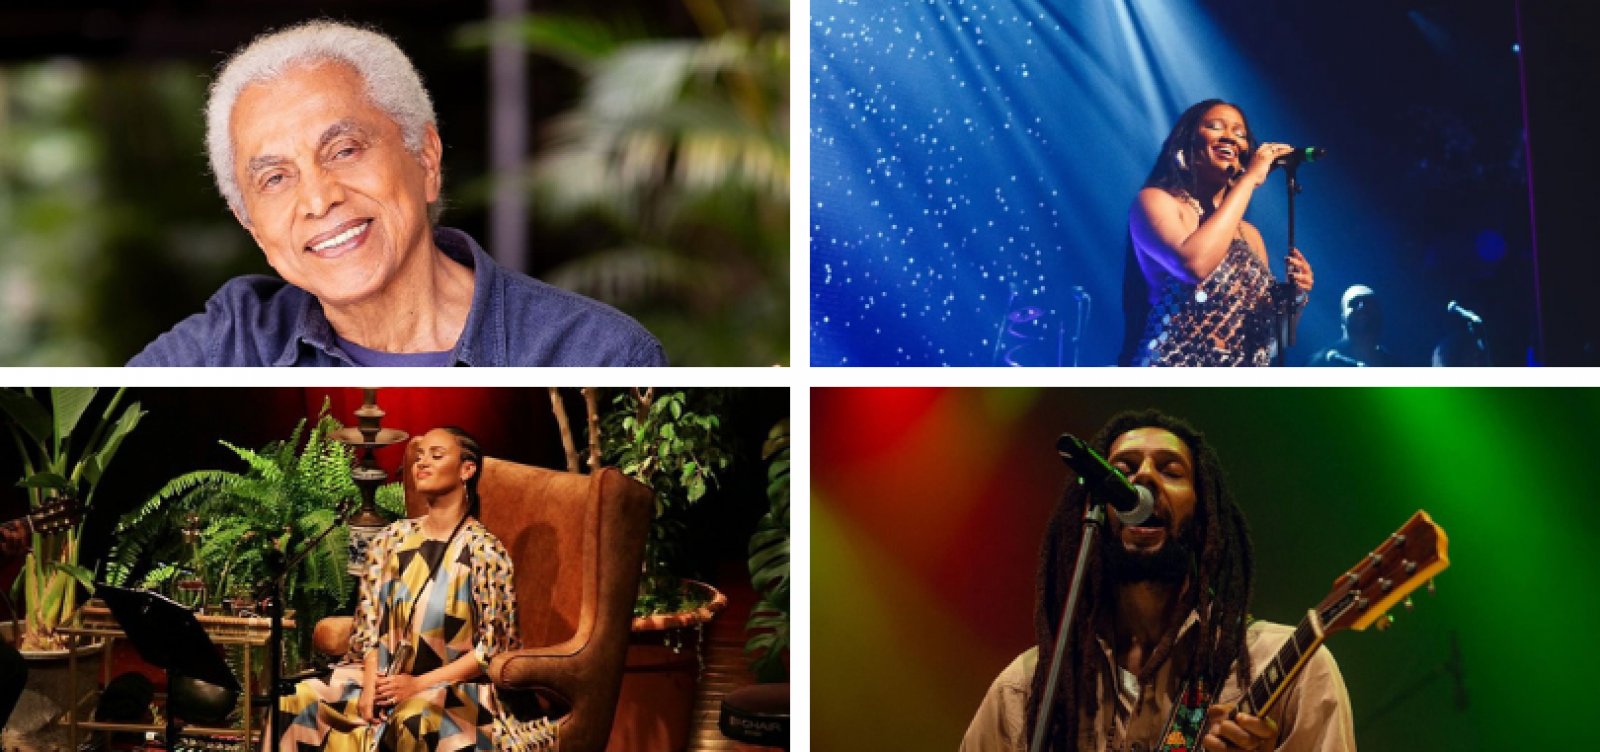 Julian Marley, Humberto Gessinger, Festival de jazz e Paulinho da Viola; confira a agenda cultural 